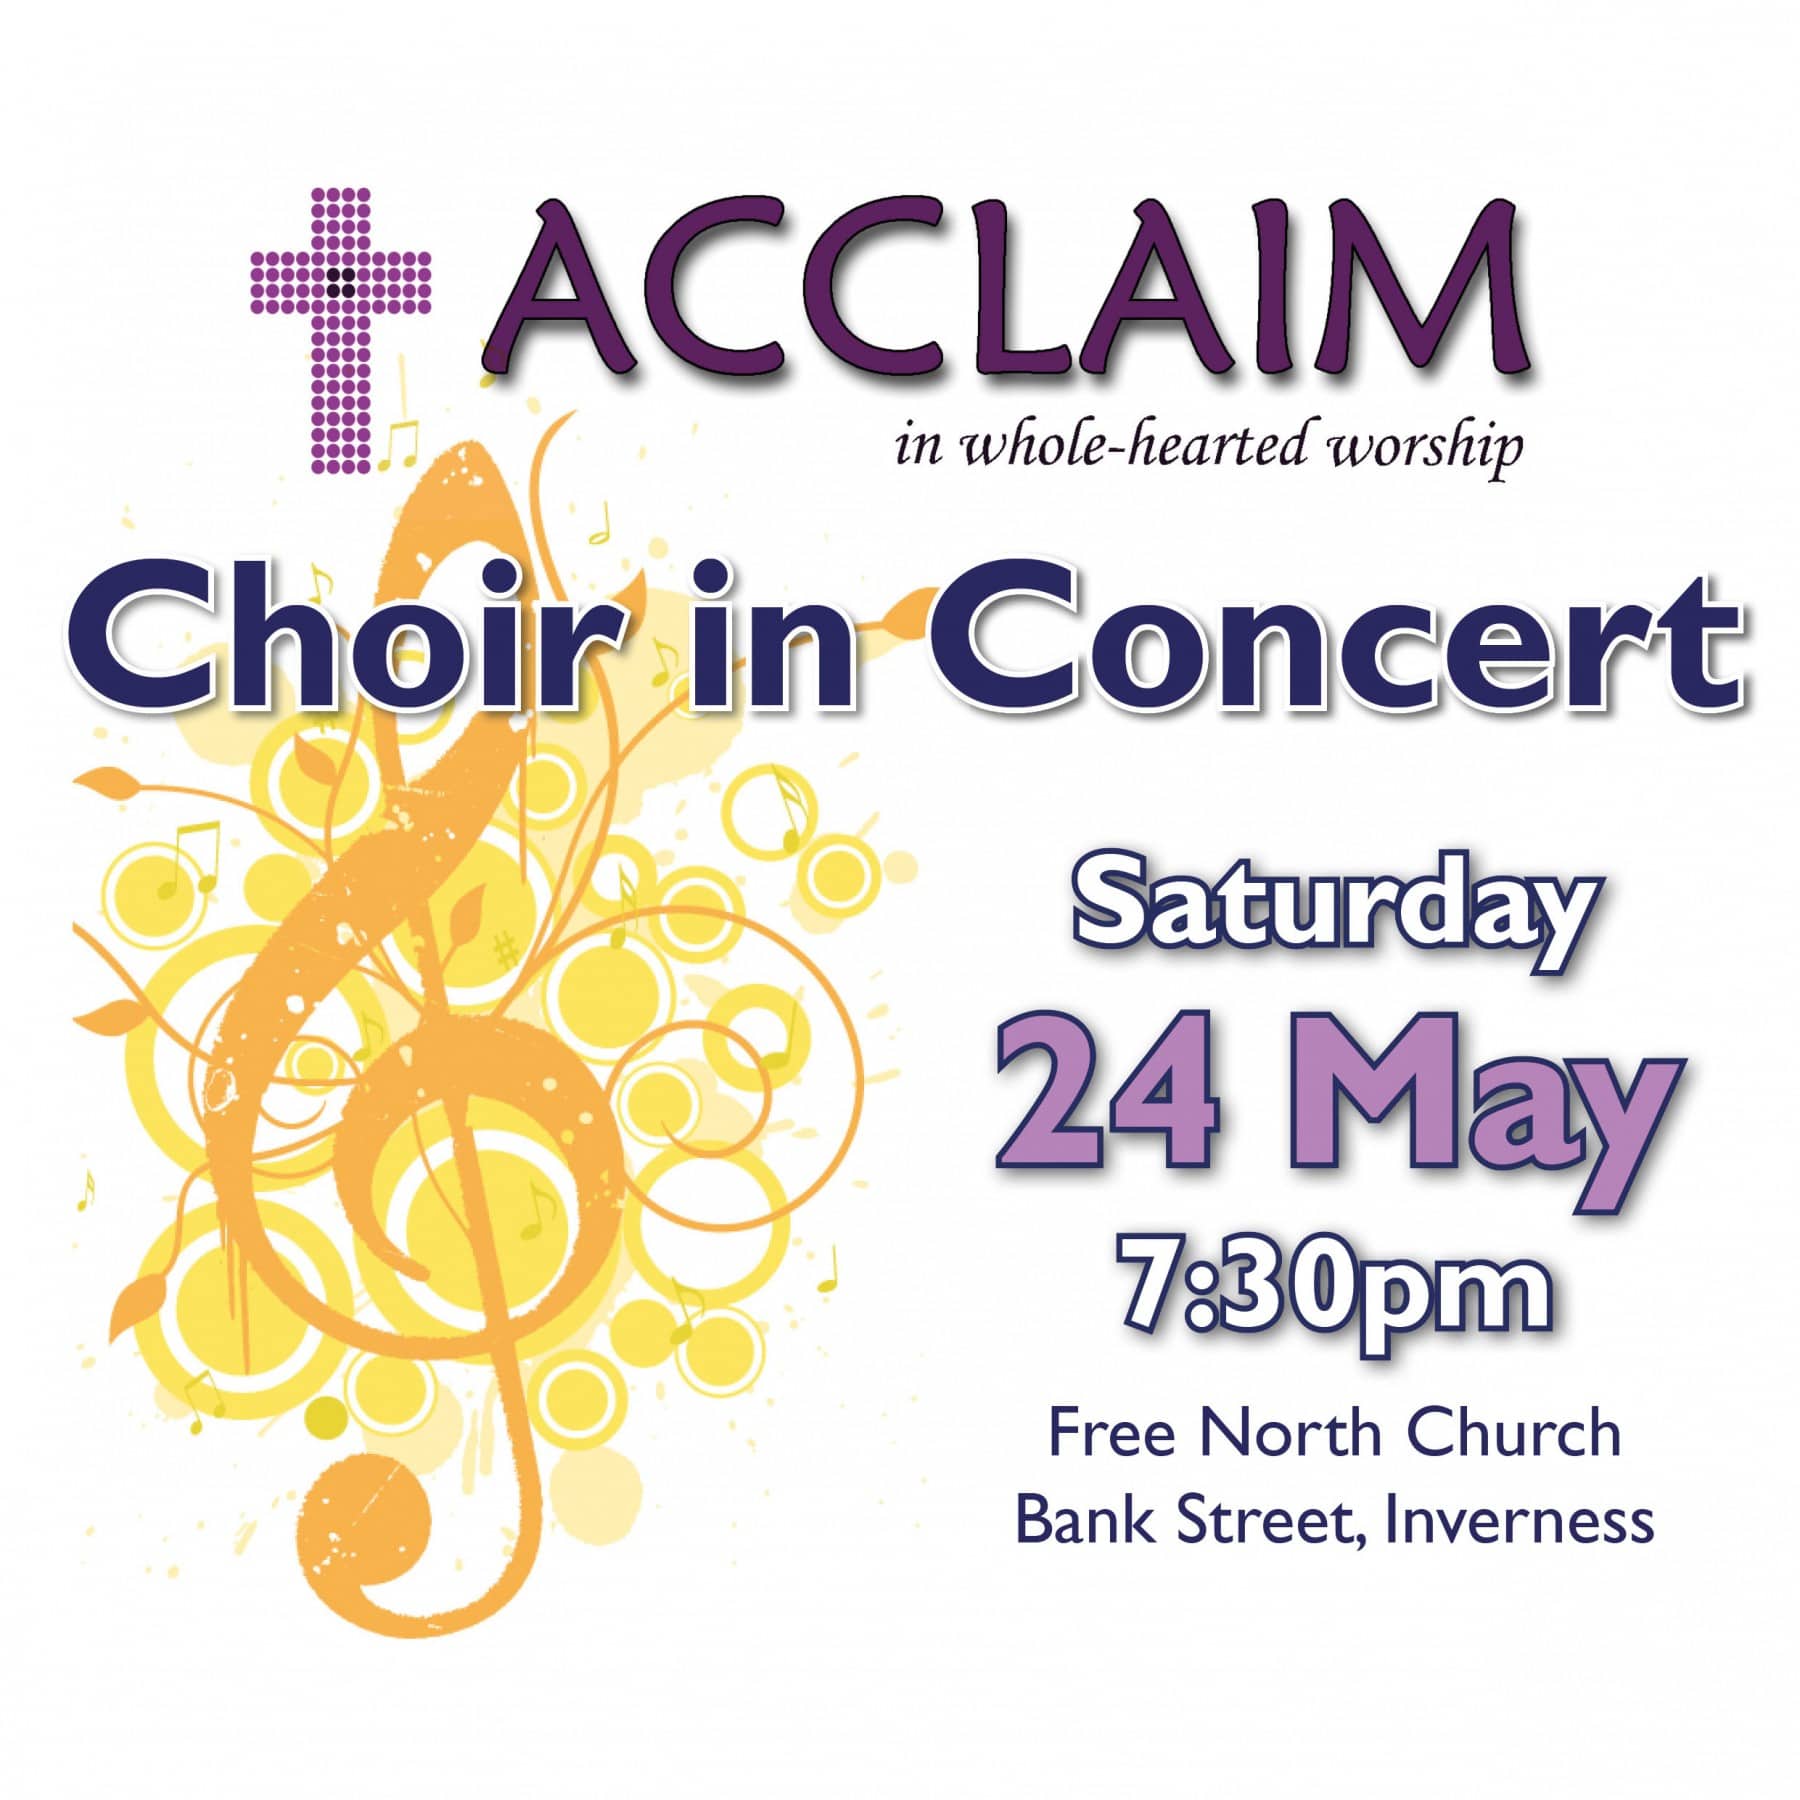 Acclaim Choir in Concert